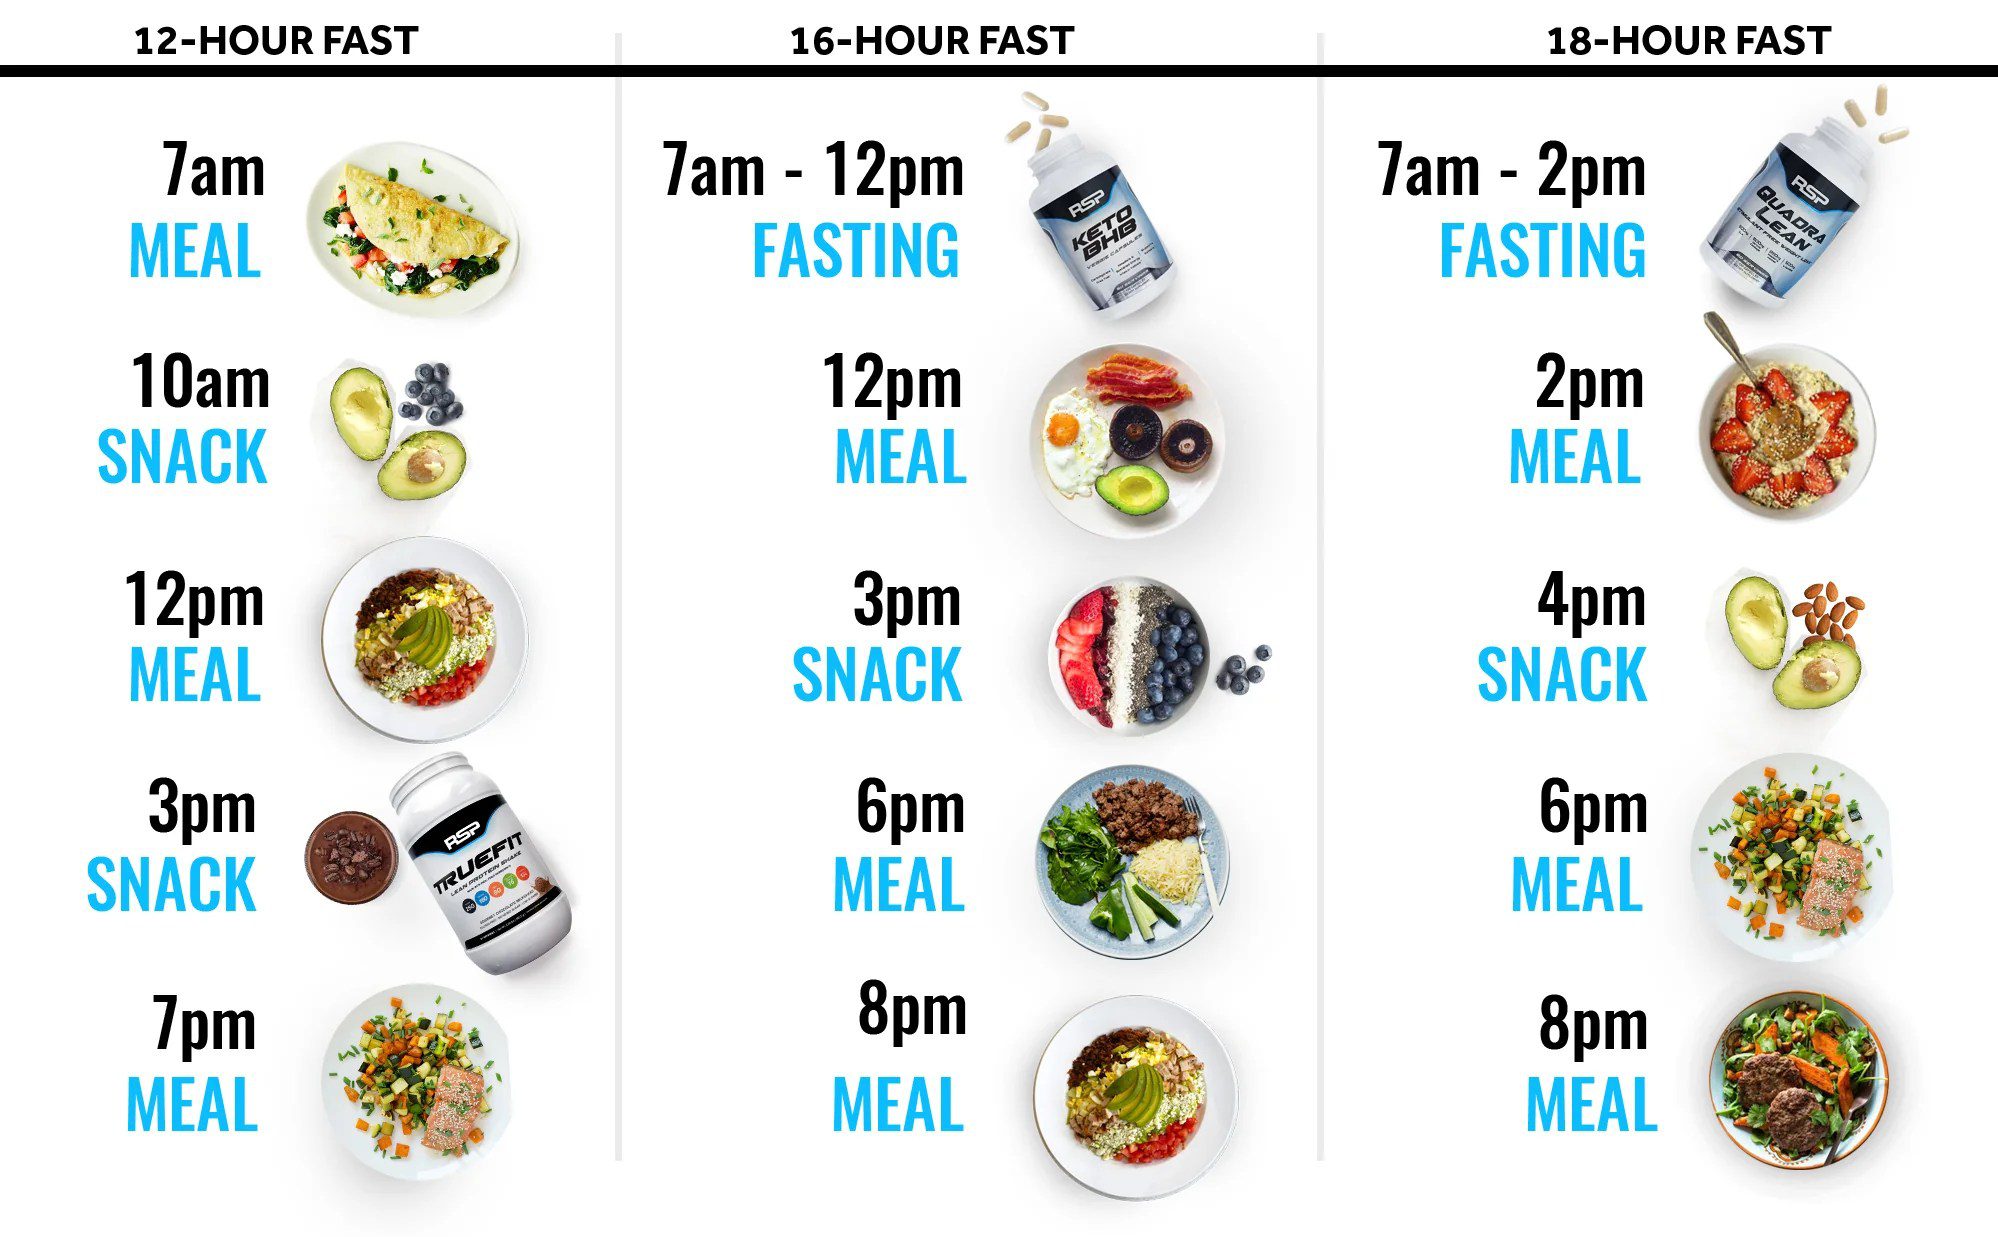 Fasting diet